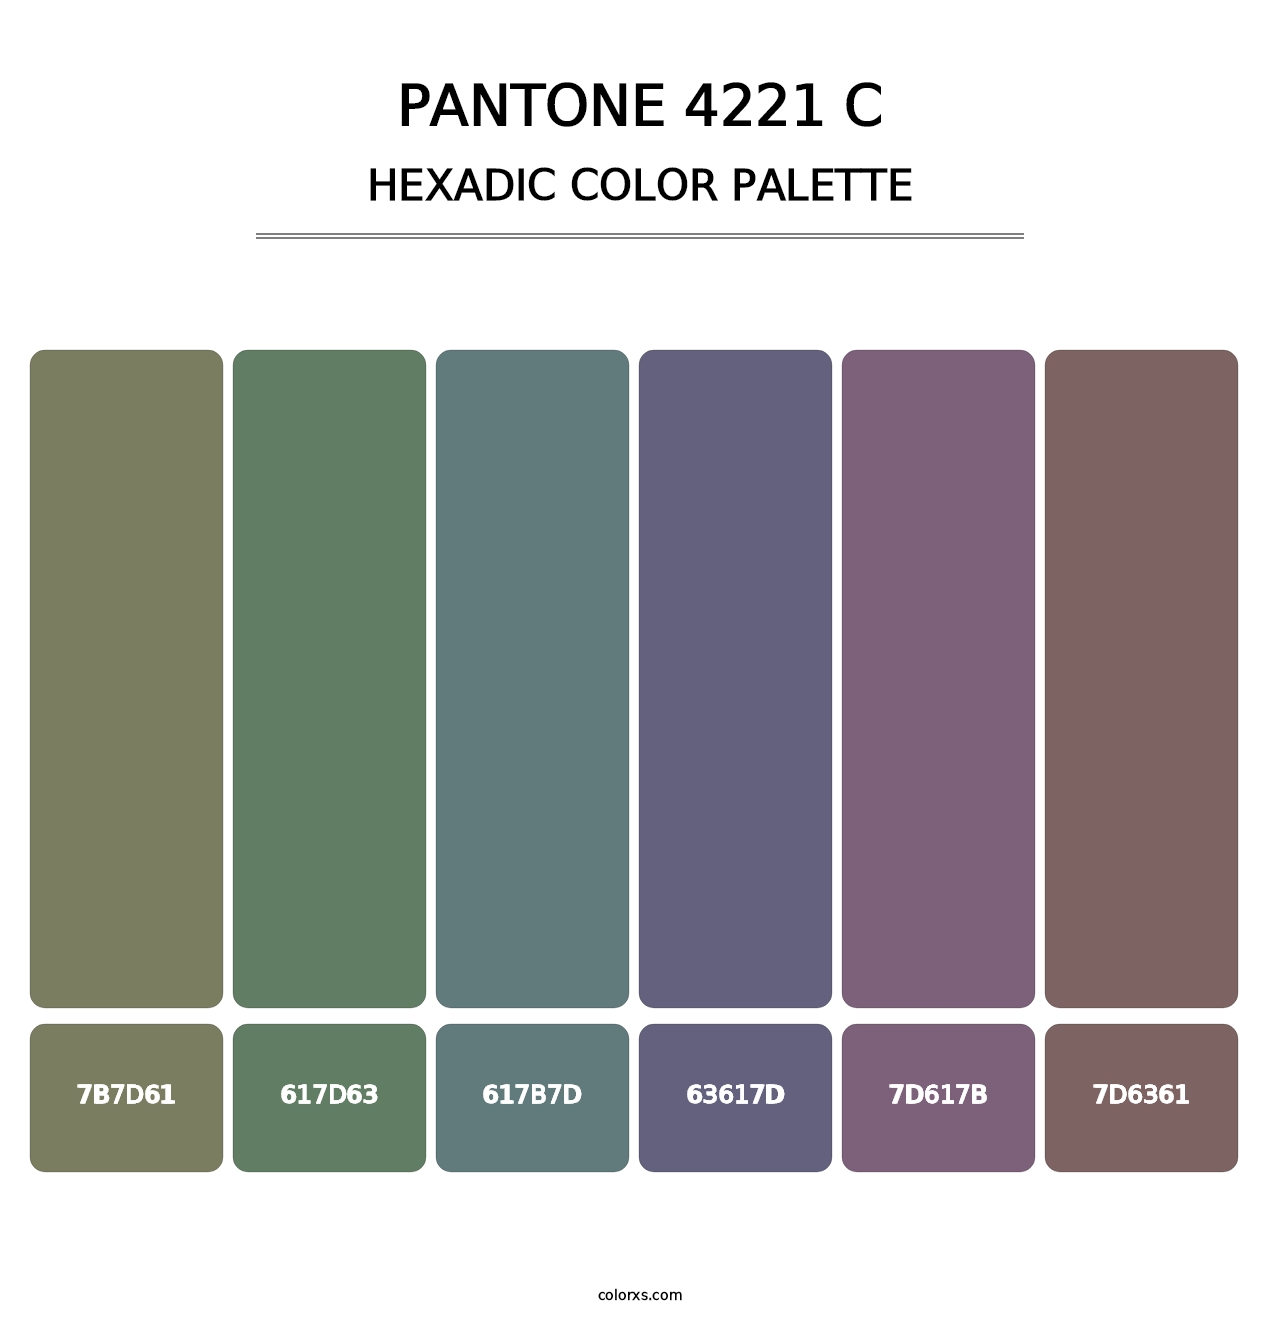 PANTONE 4221 C - Hexadic Color Palette